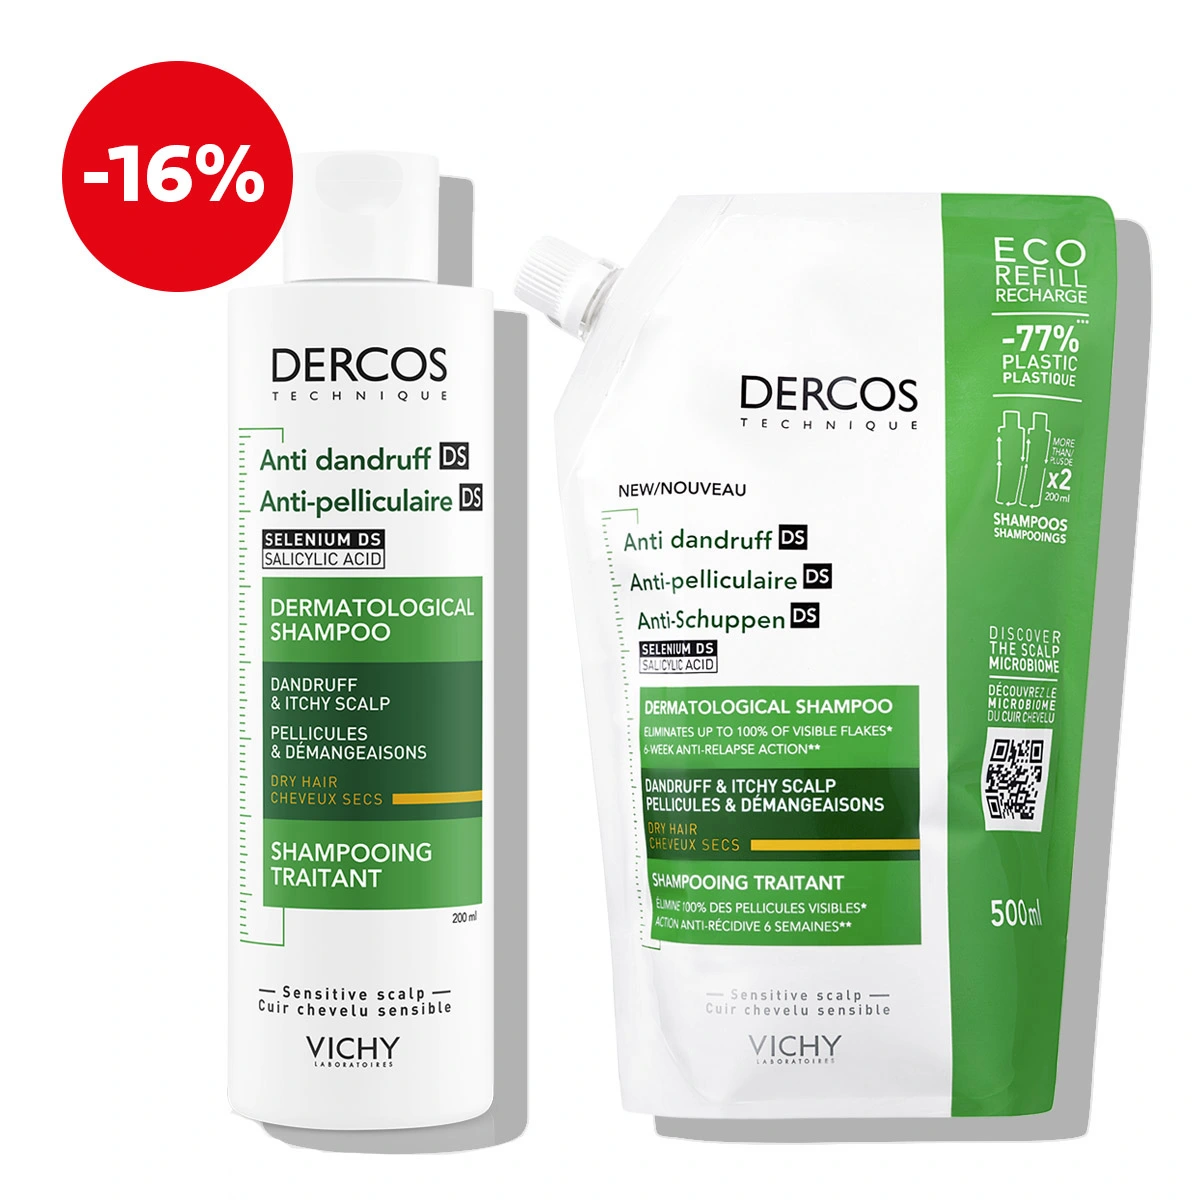 Vichy DERCOS Anti-Dandruff Shampoo eco refill for dry scalp (1)